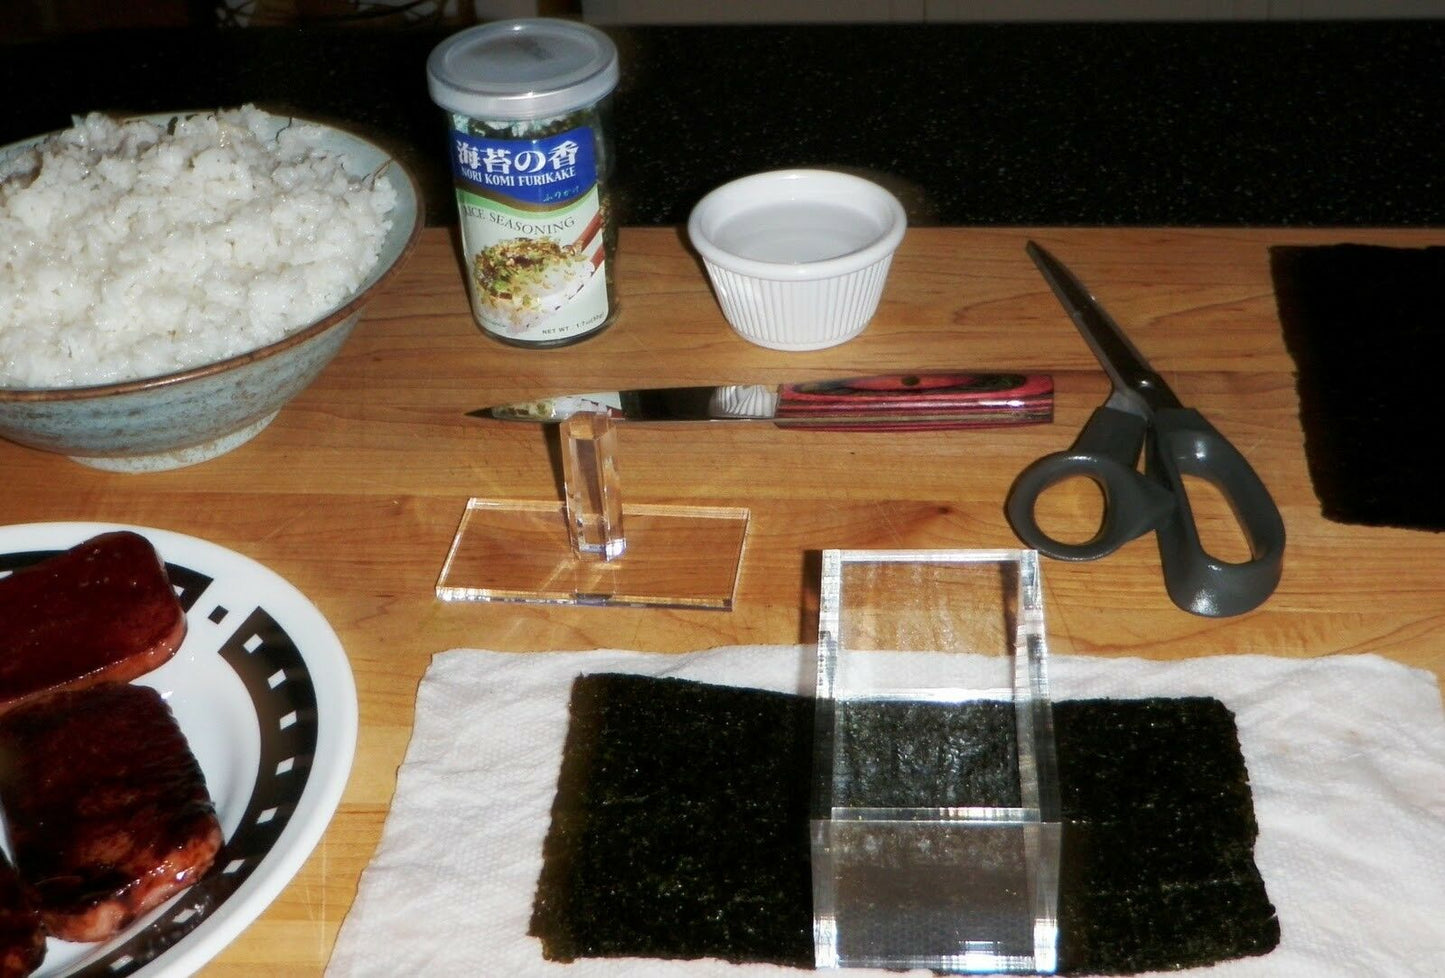 Blue Double Economy Sized Spam Musubi Sushi Maker Mold Non Stick